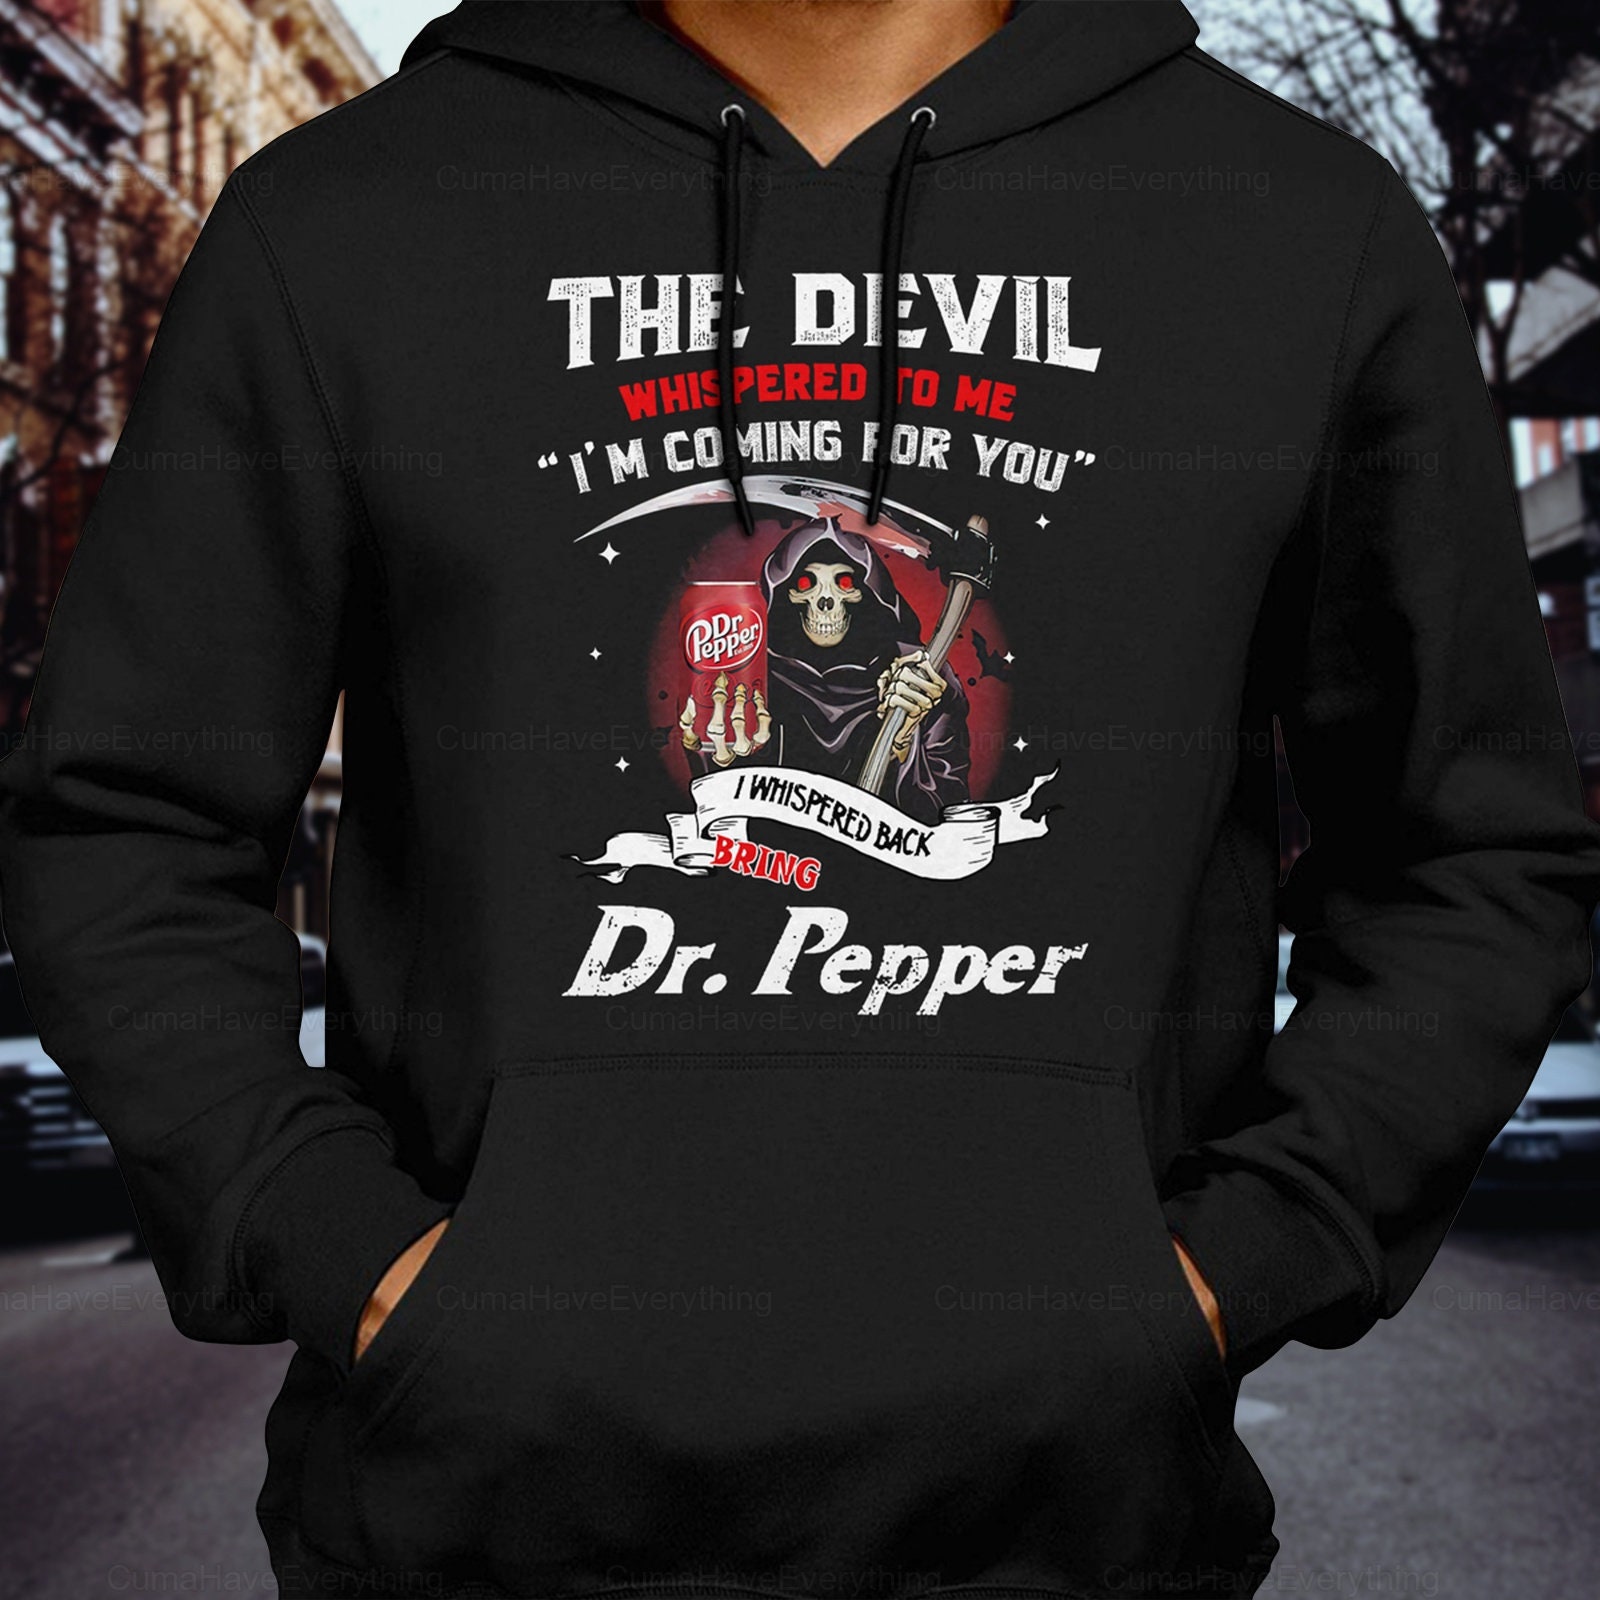 Discover Dr Pepper Shirt, The Devil Whispered To Me I'm Coming Shirt, Dr Pepper Unisex Tshirt, Shirts For Men, Skull Shirt Women, Trendy Sweatshirt